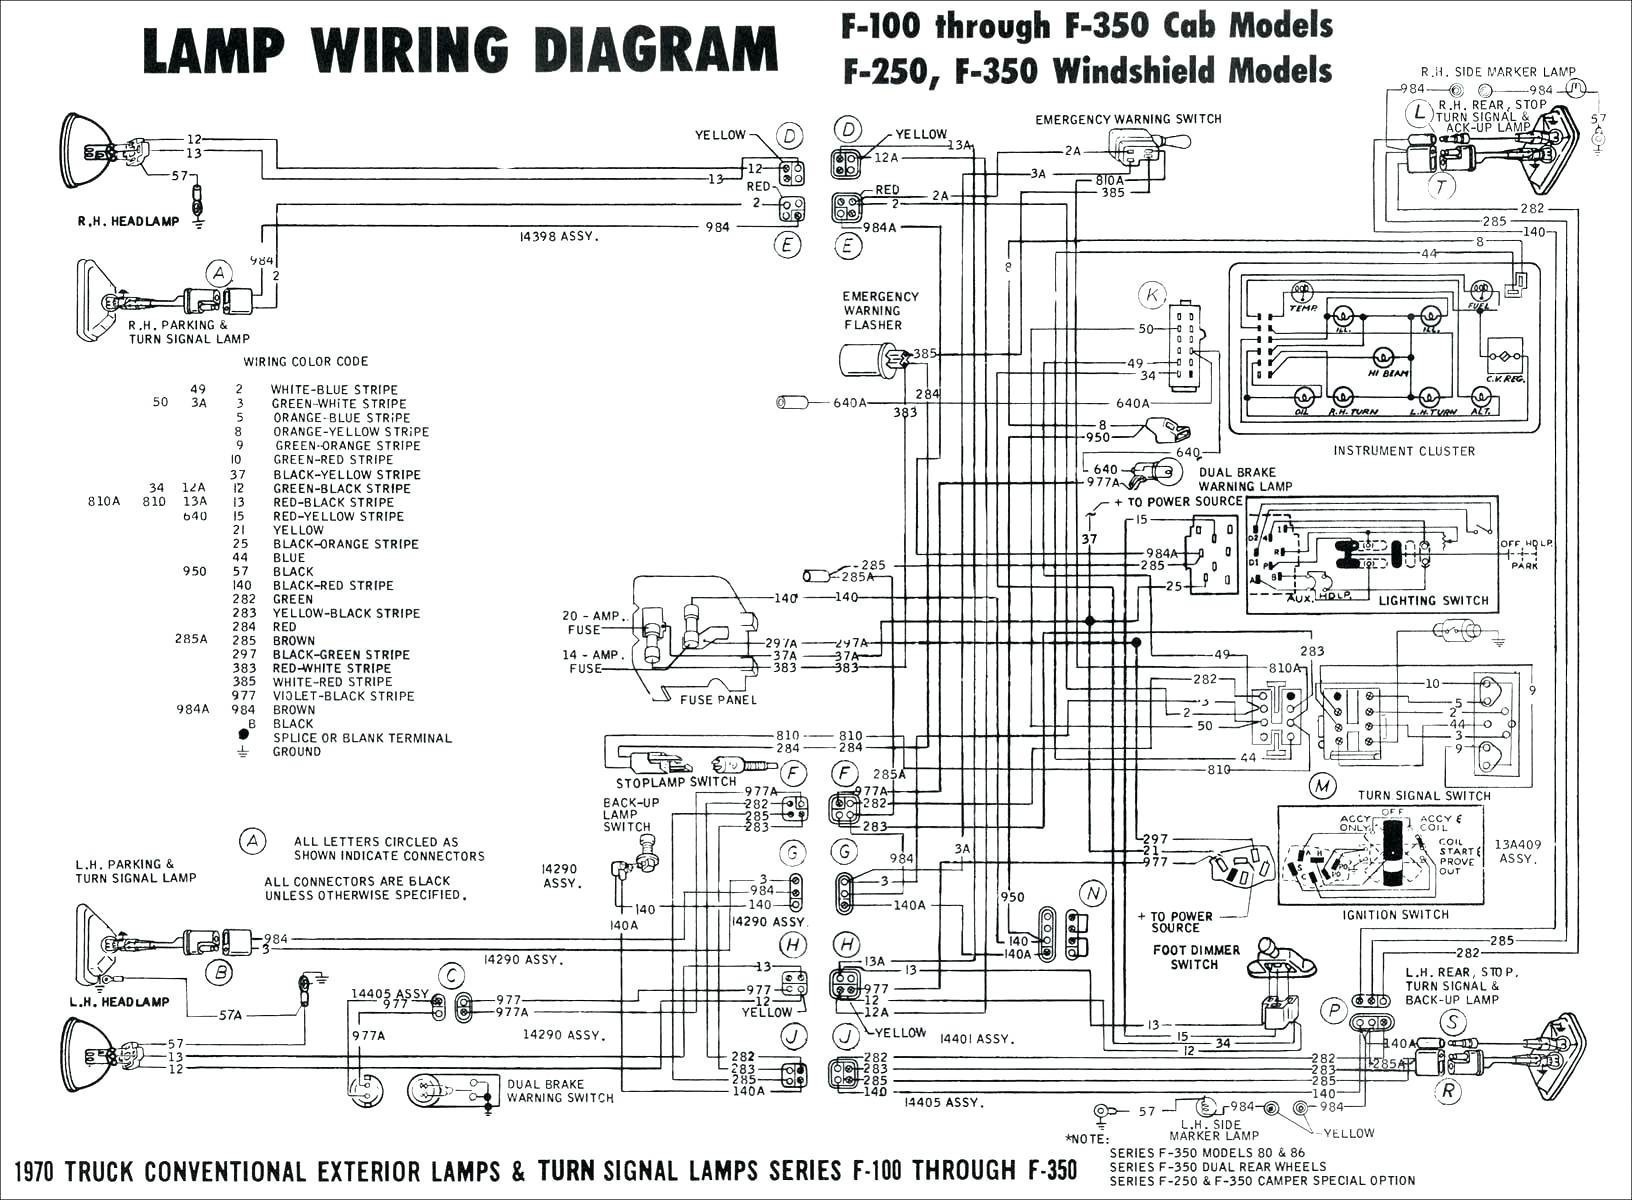 Honda Accord V6 Engine Diagram 1997 Accord Fuse Diagram Layout Wiring Diagrams •